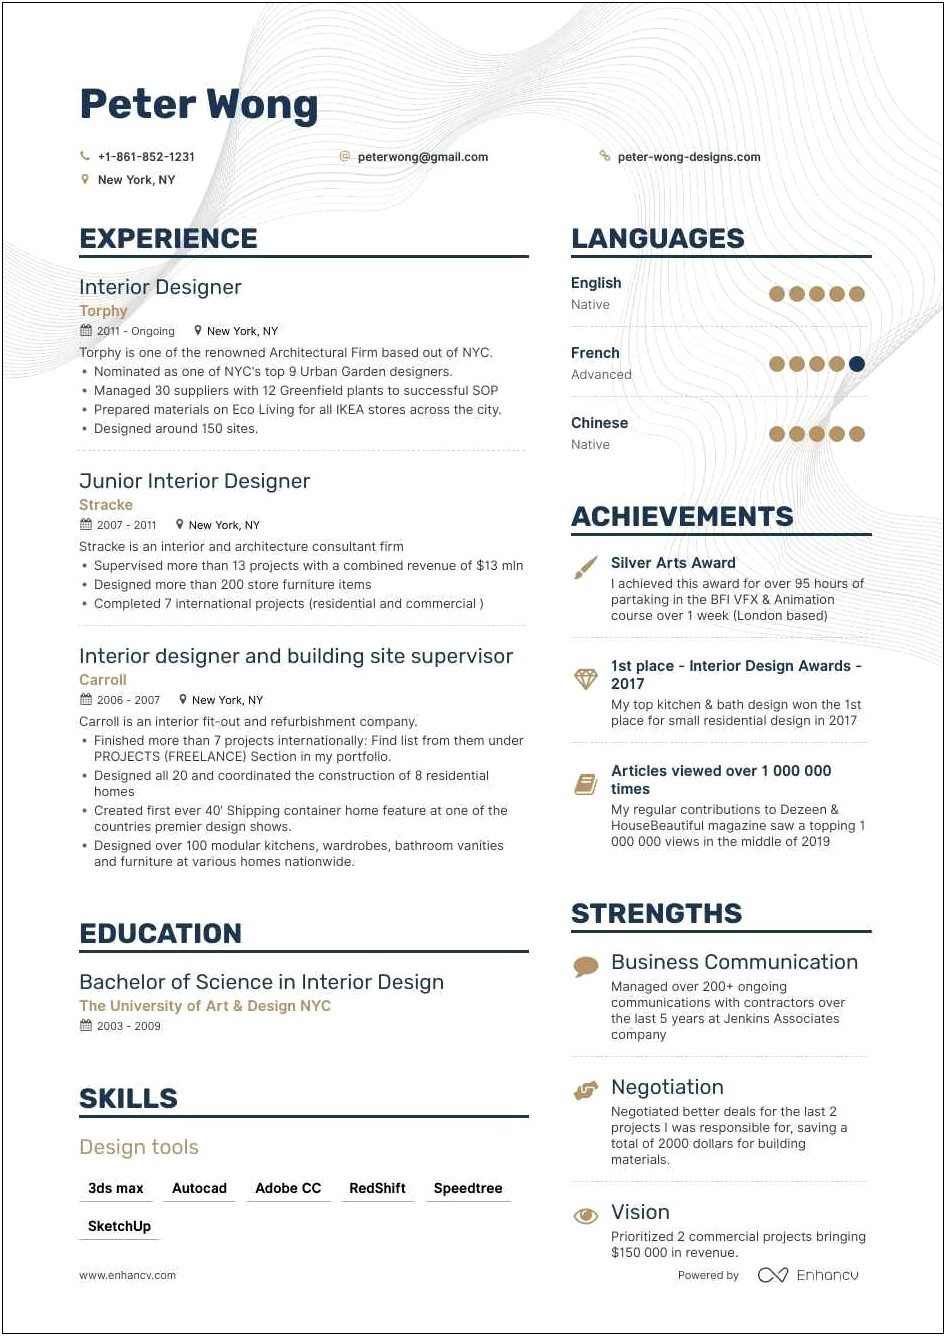 Design Intern Job Description For Resume